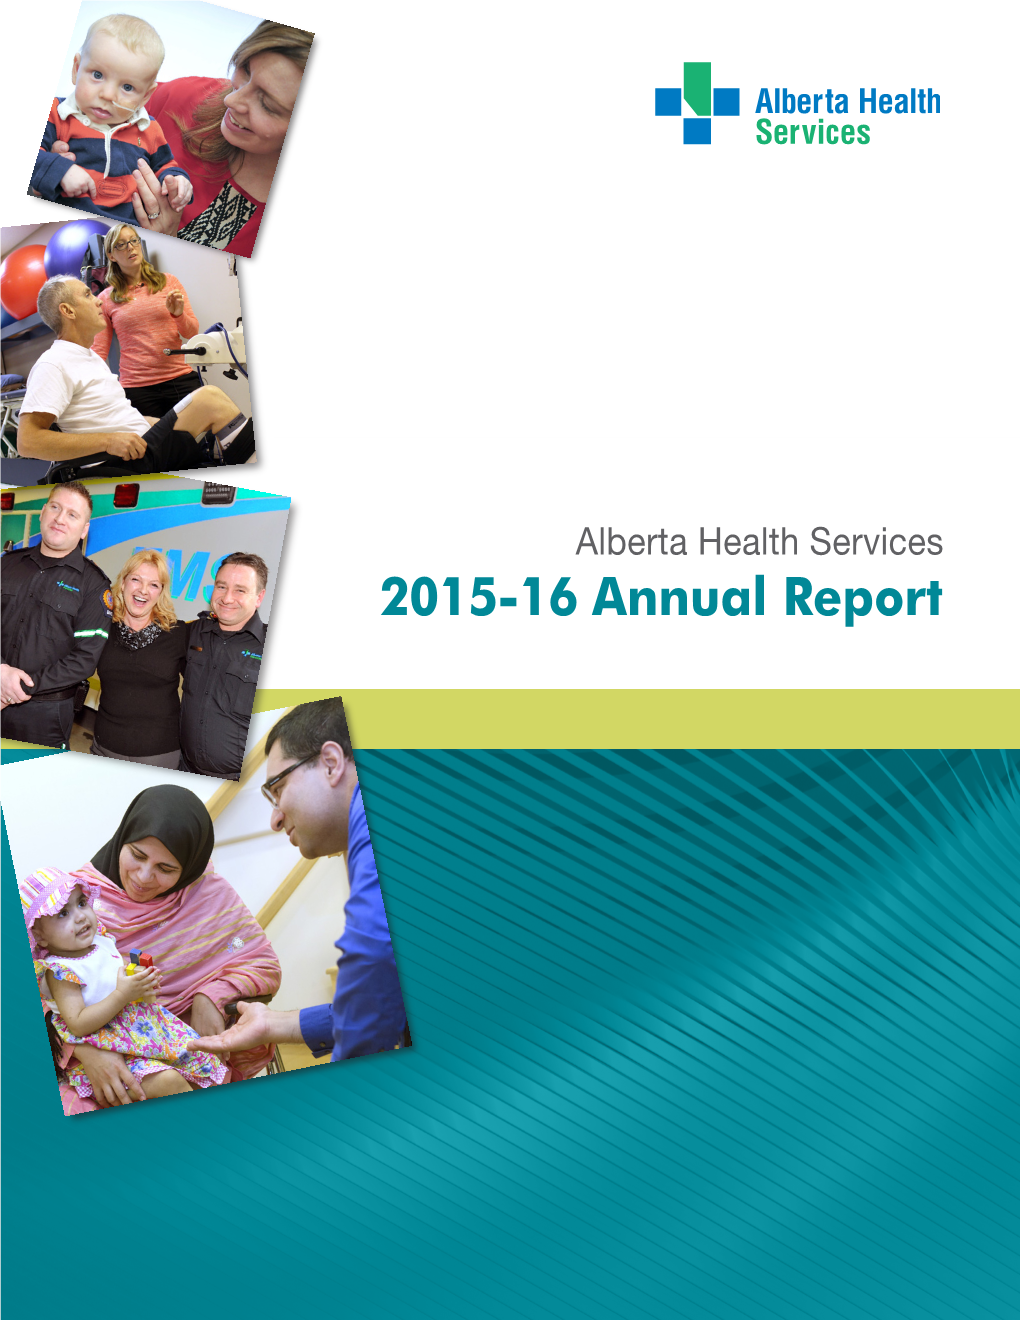 AHS 2015/16 Annual Report